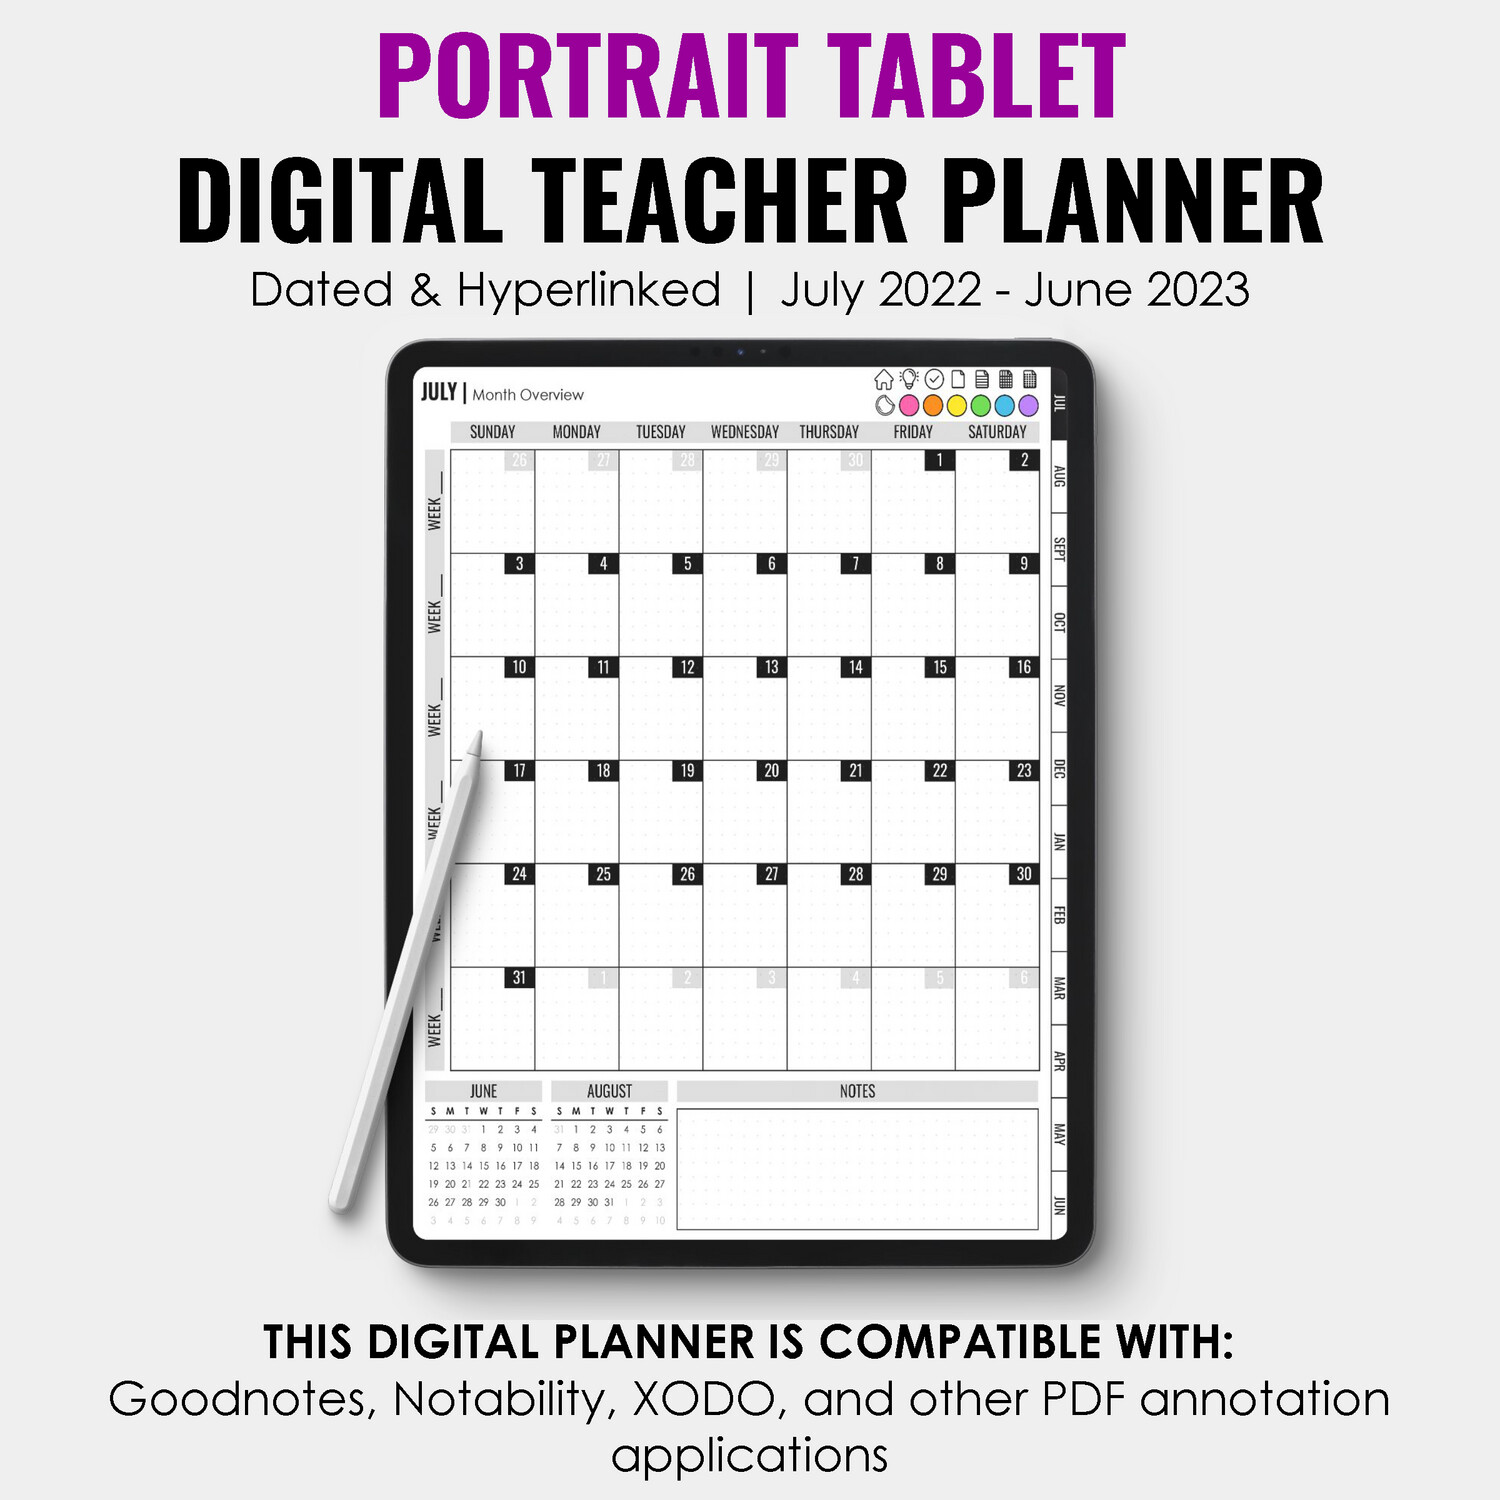 2022-2023 Tablet Digital Teacher Planner | Portrait